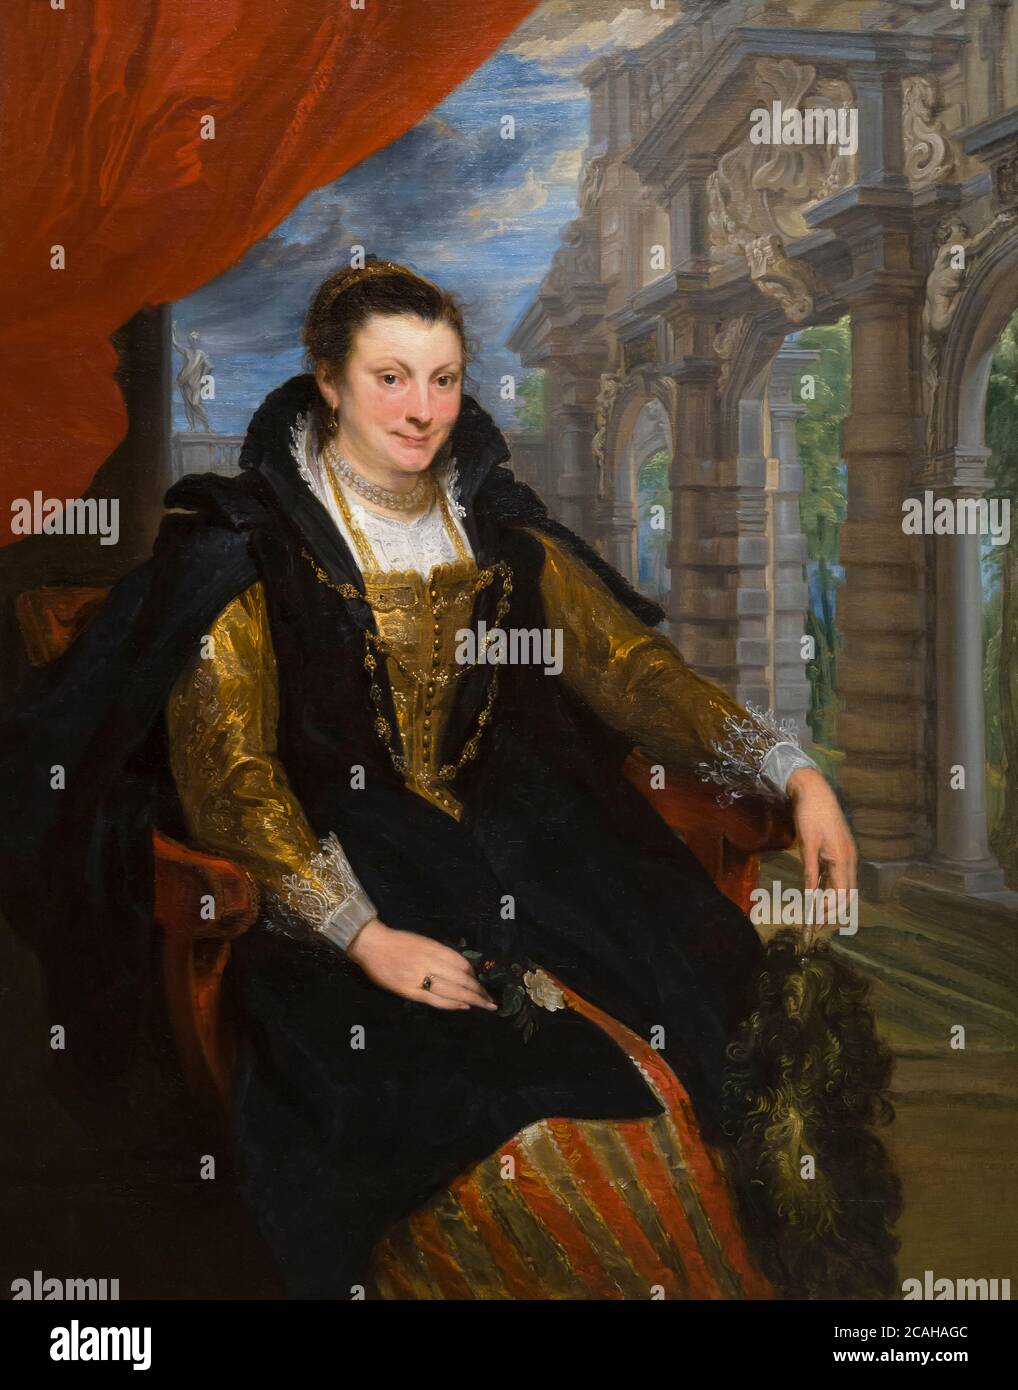 Isabella Brant, Sir Anthony Van Dyck, 1621, National Gallery of Art, Washington DC, USA, Amérique du Nord Banque D'Images